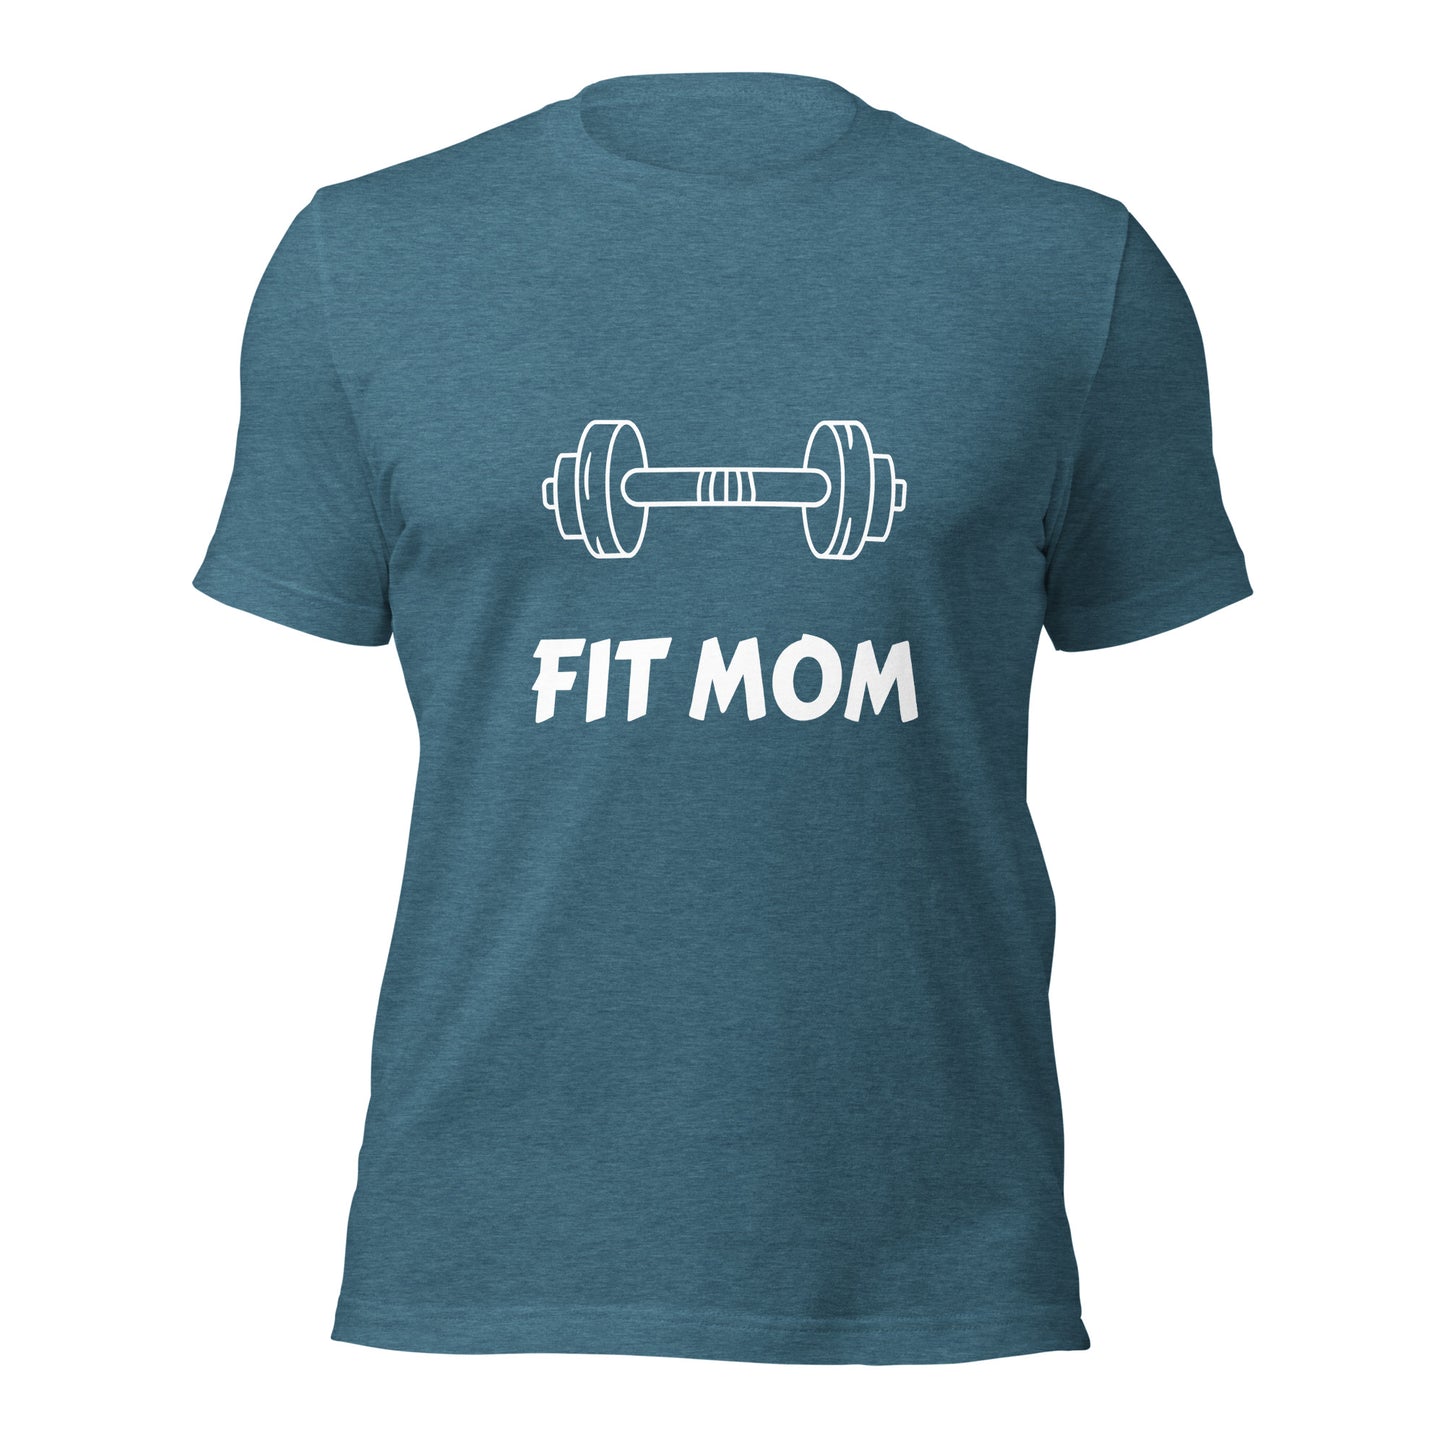 Fit Mom Printed T-shirt